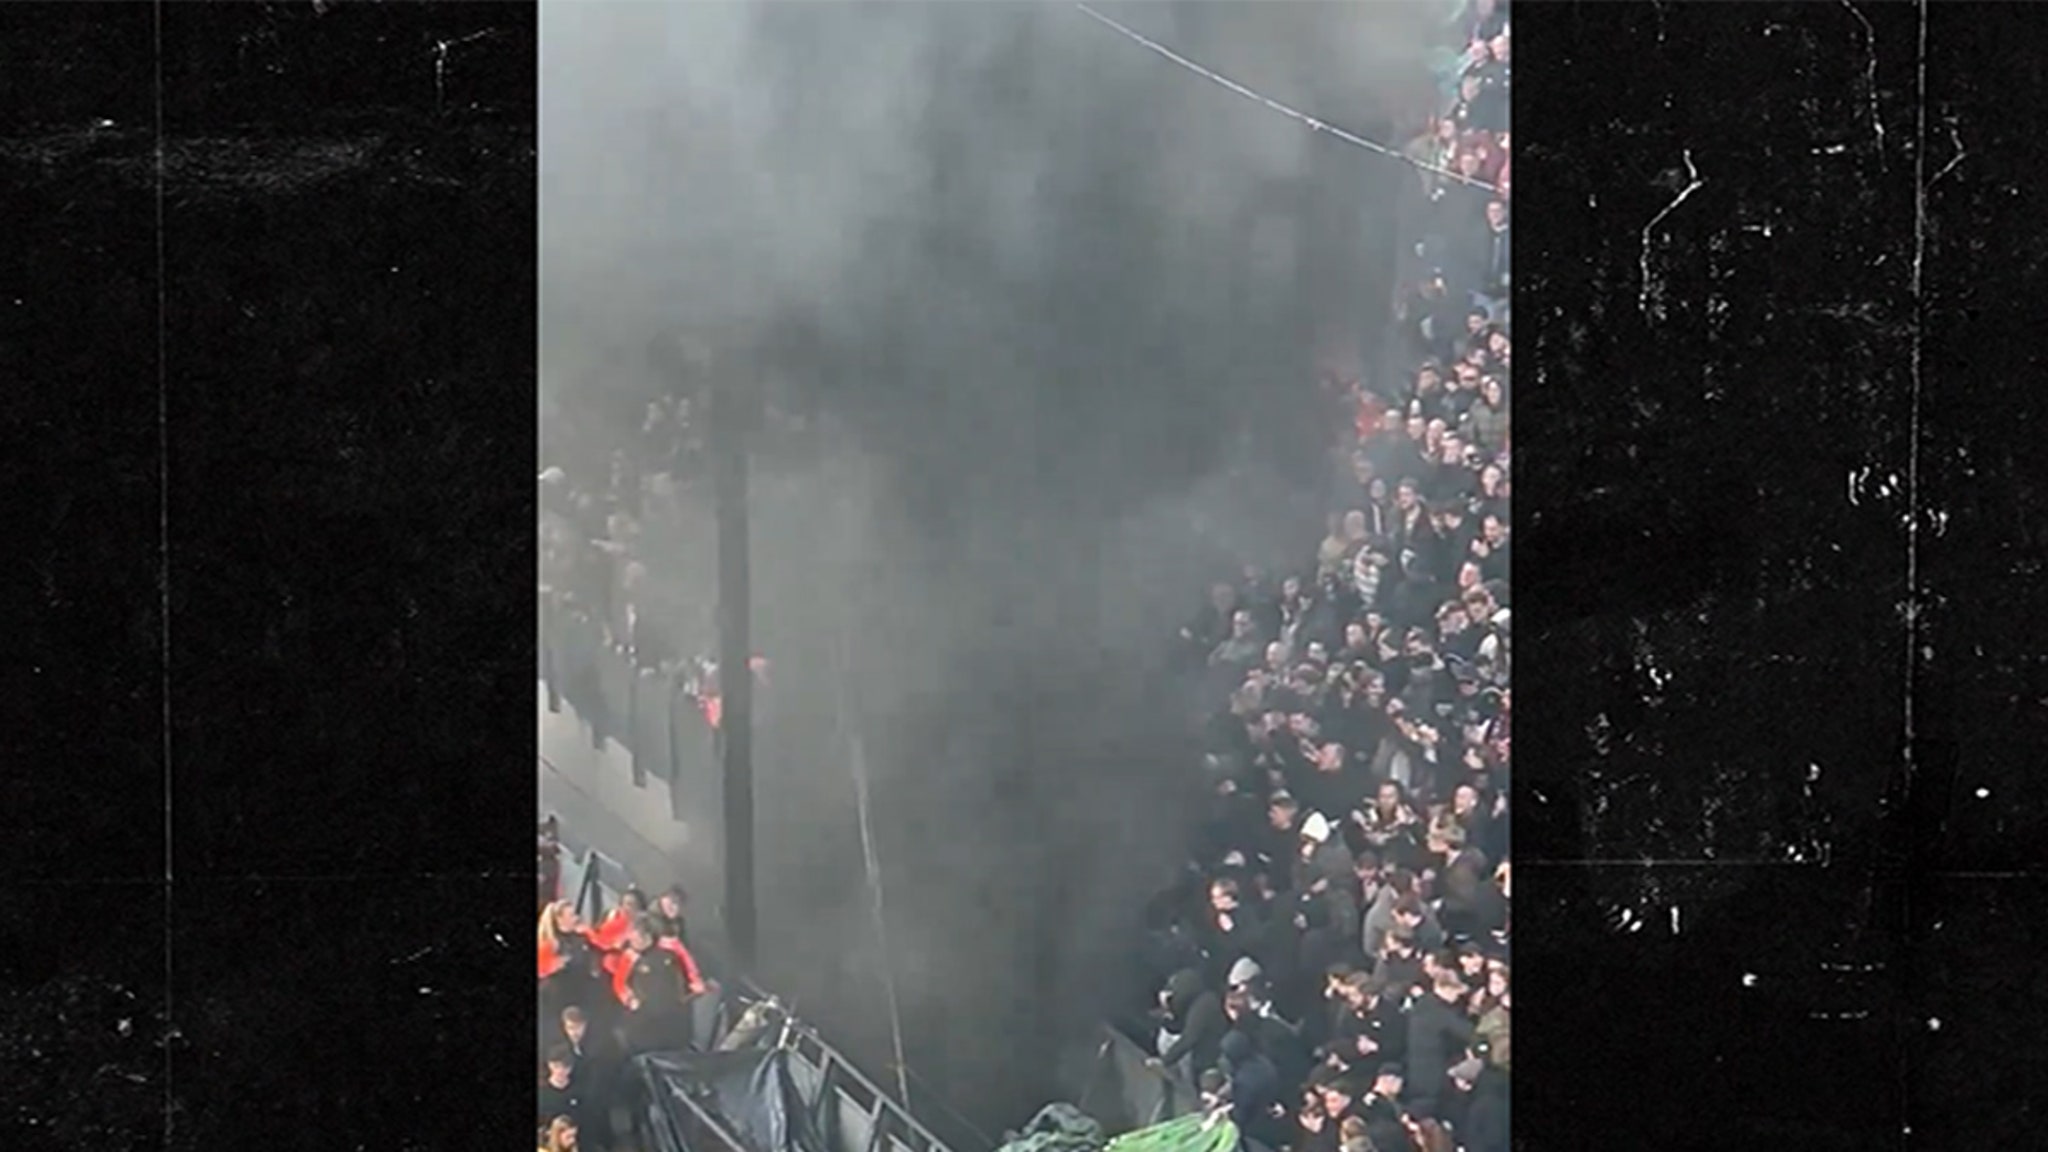 Fire breaks out behind goal during Dutch soccer match final